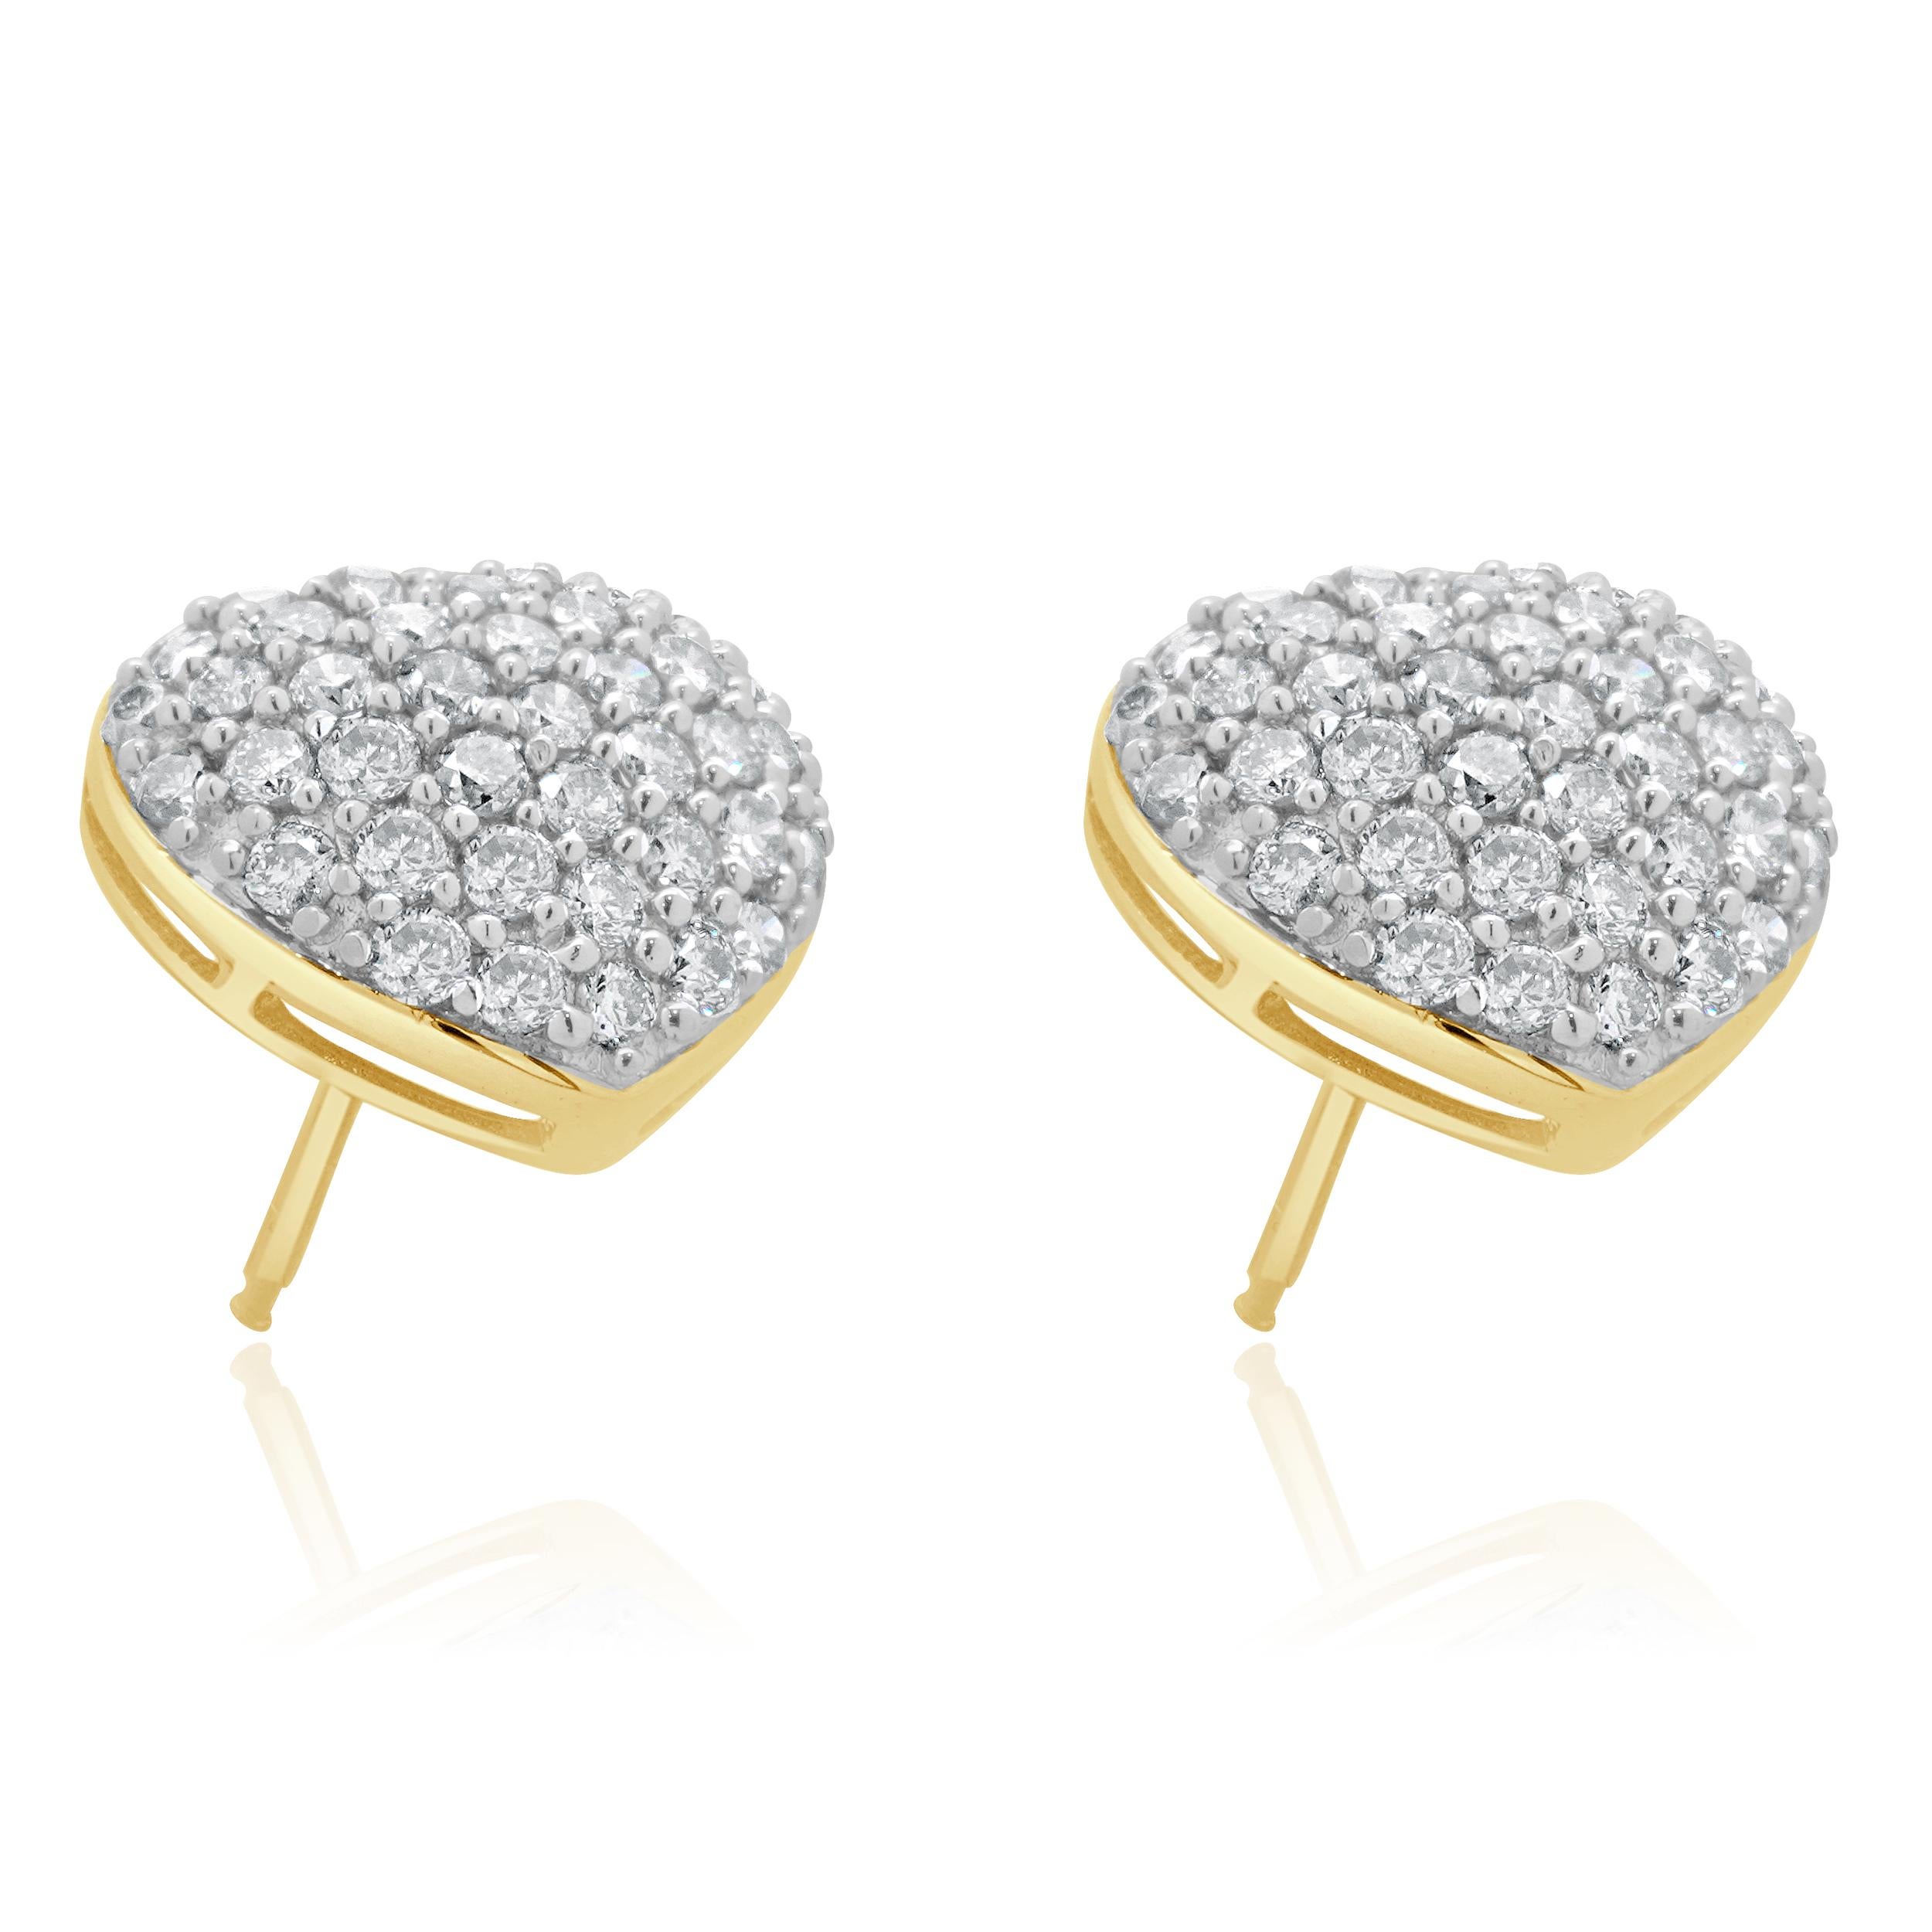 Designer: custom design
Material: 14K yellow gold
Diamonds: 80 round brilliant cut = 1.20cttw
Color: H 
Clarity: SI1-2
Dimensions: earrings measure 15 x 10mm 
Weight: 2.76 grams
